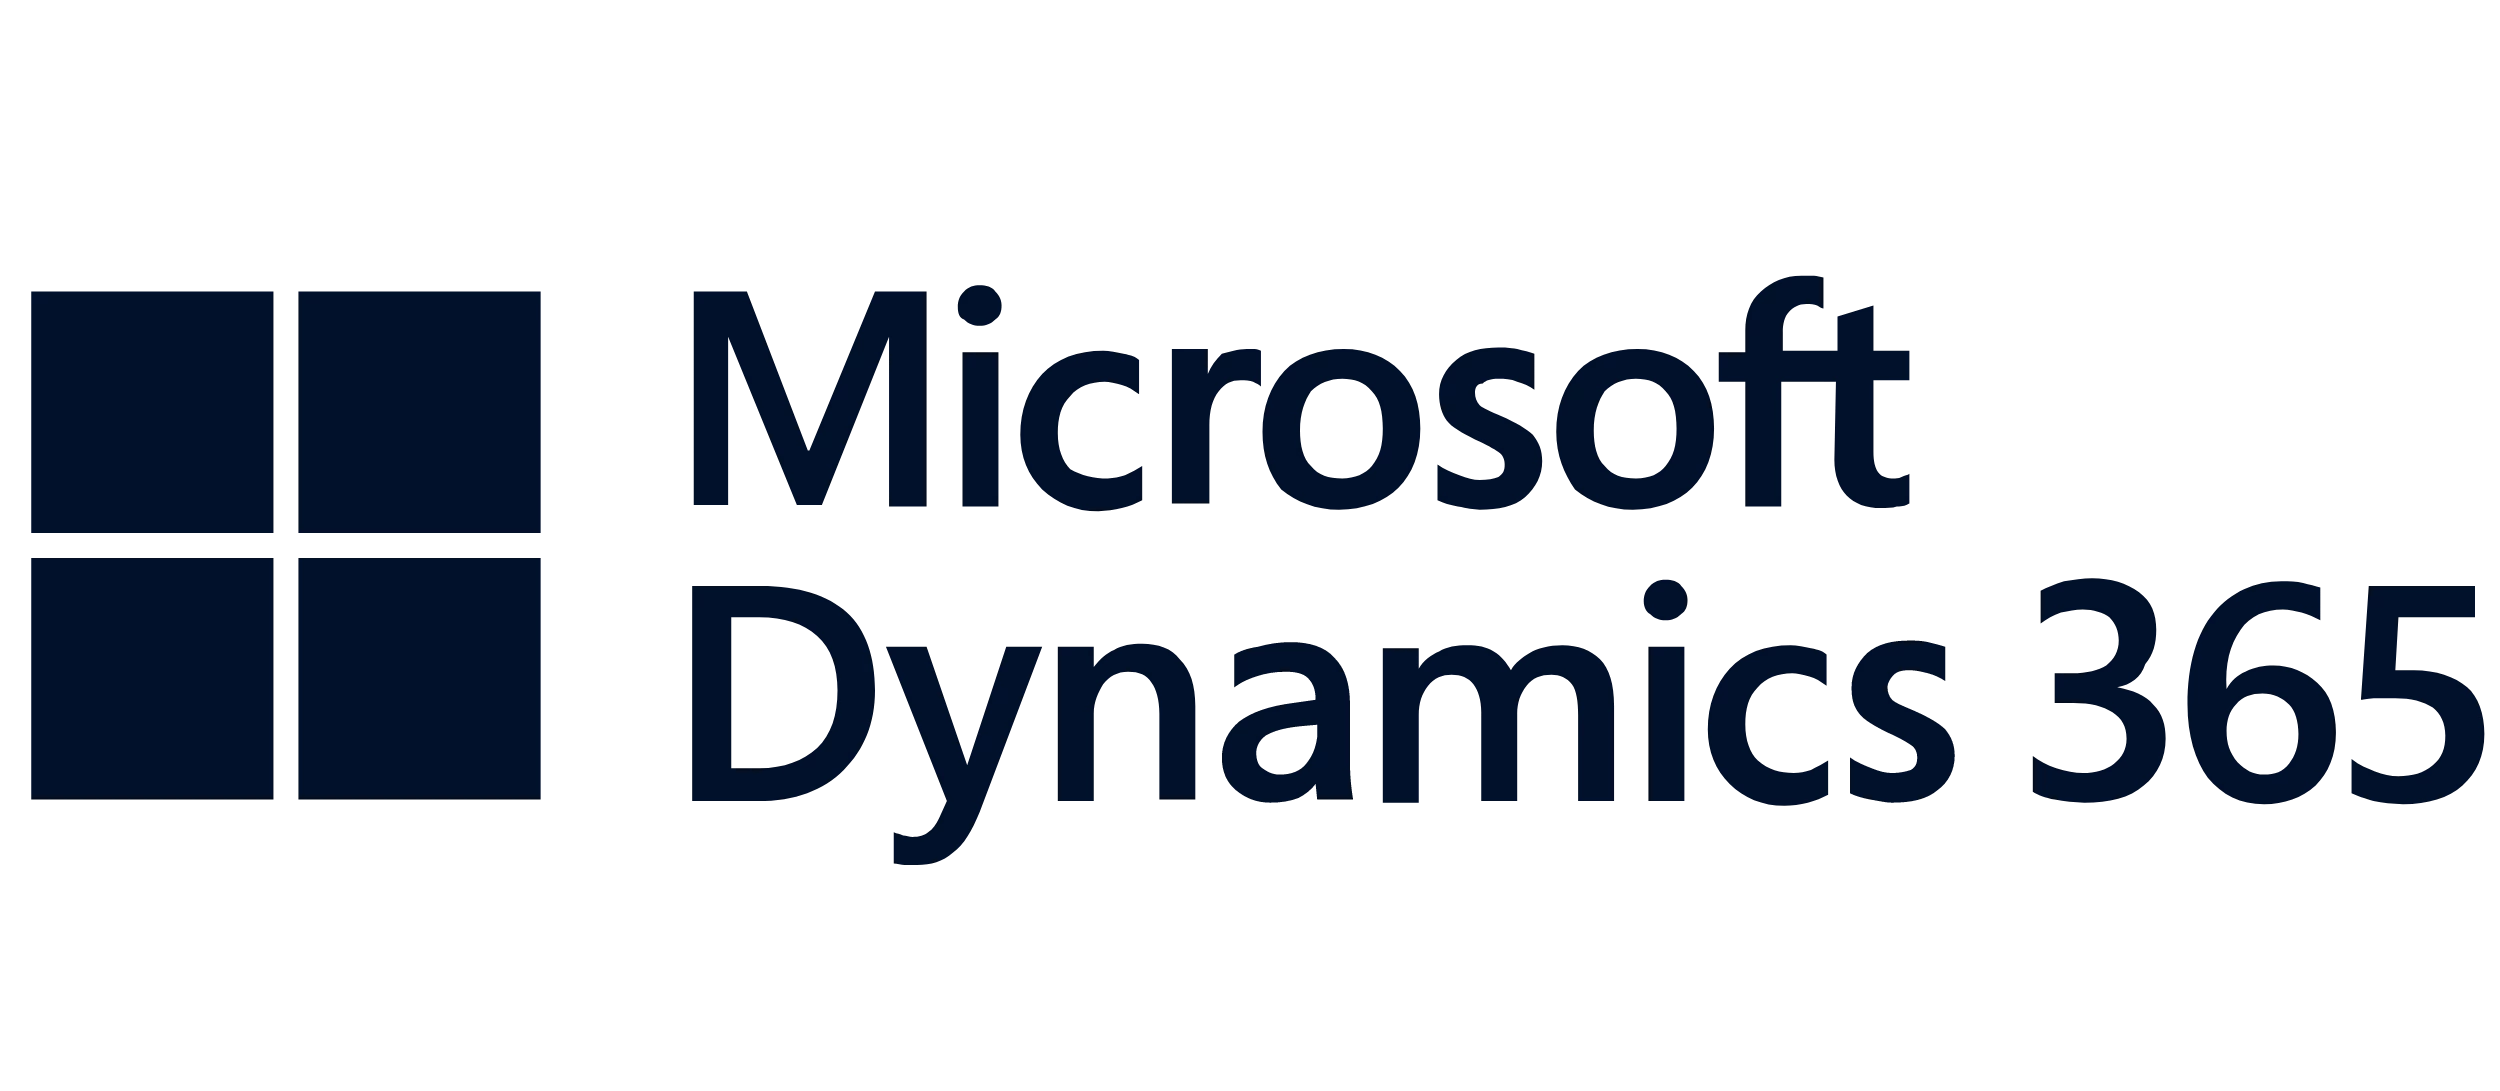 Microsoft Dynamic 365 logo